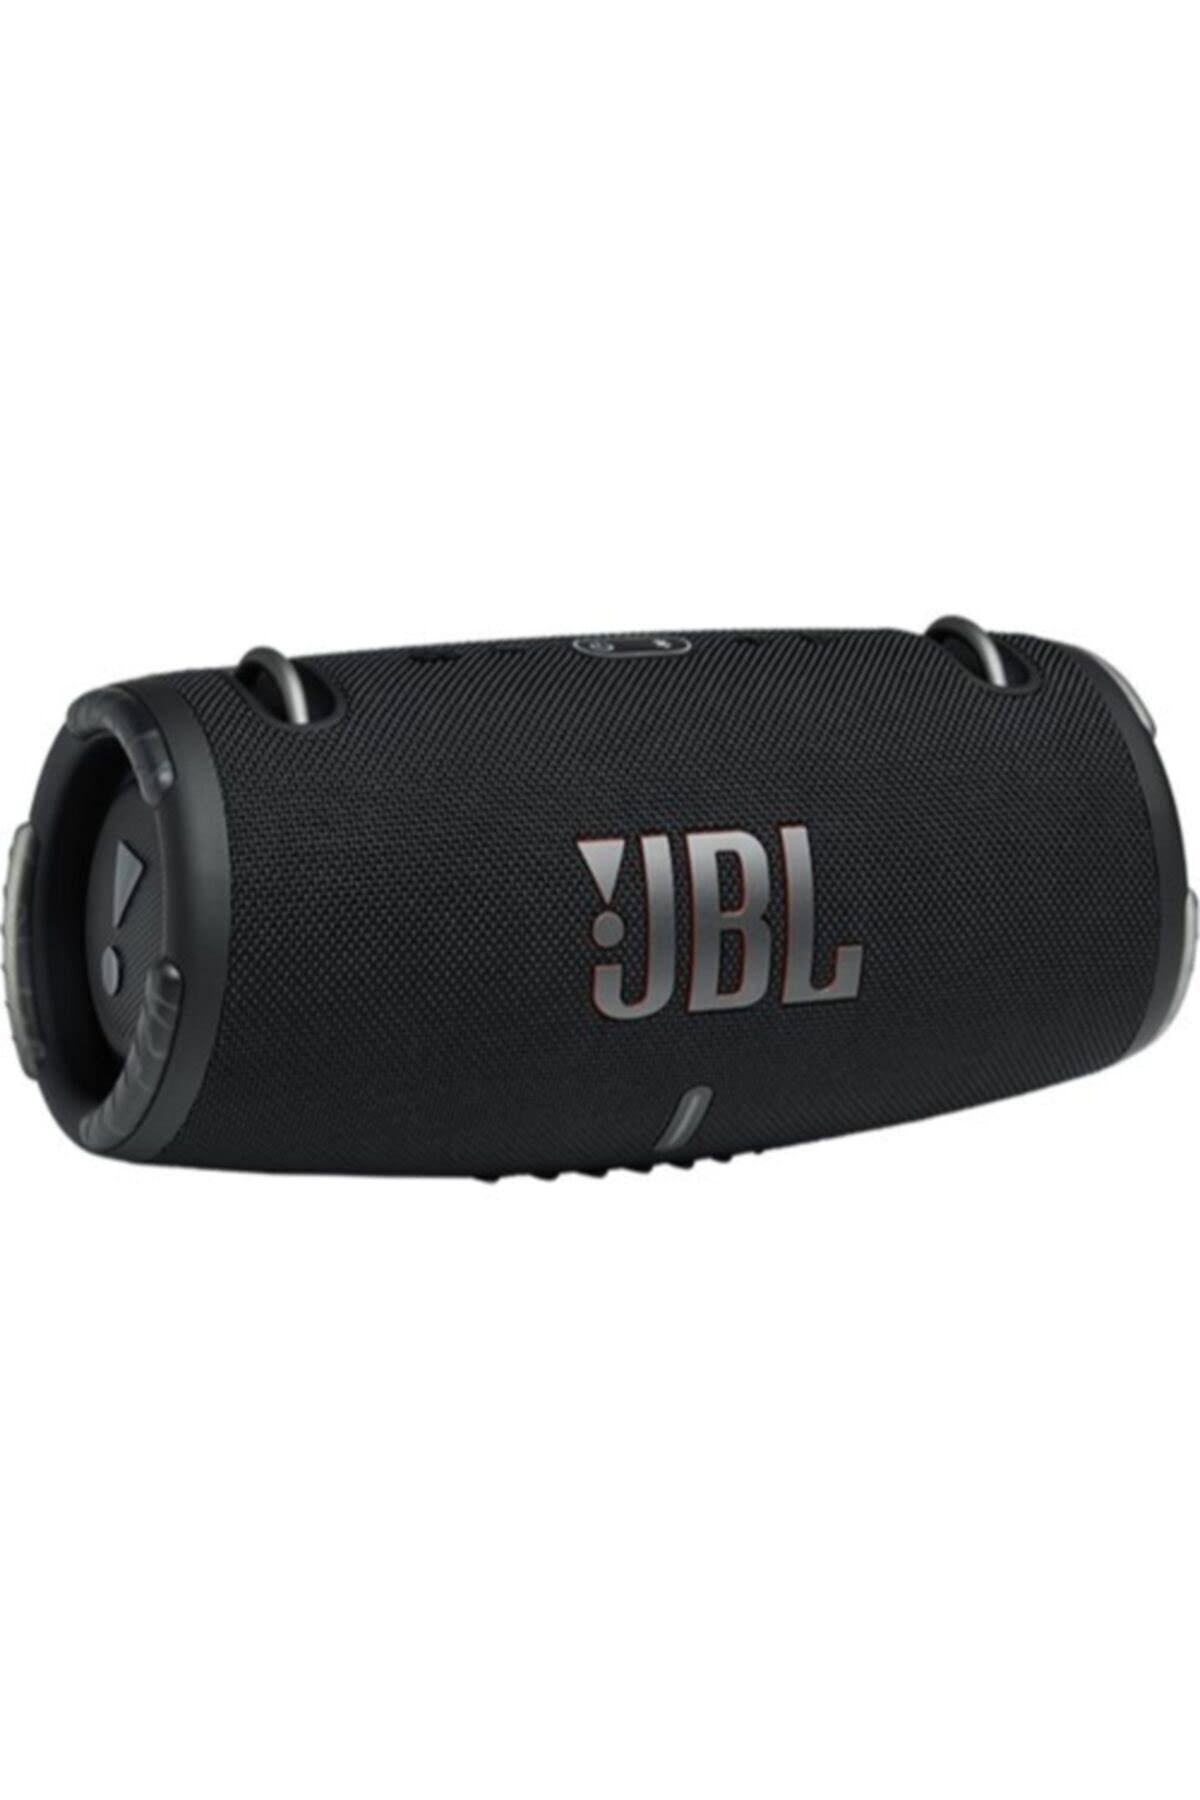 JBL Xtreme 3 Altavoz Bluetooth Negro